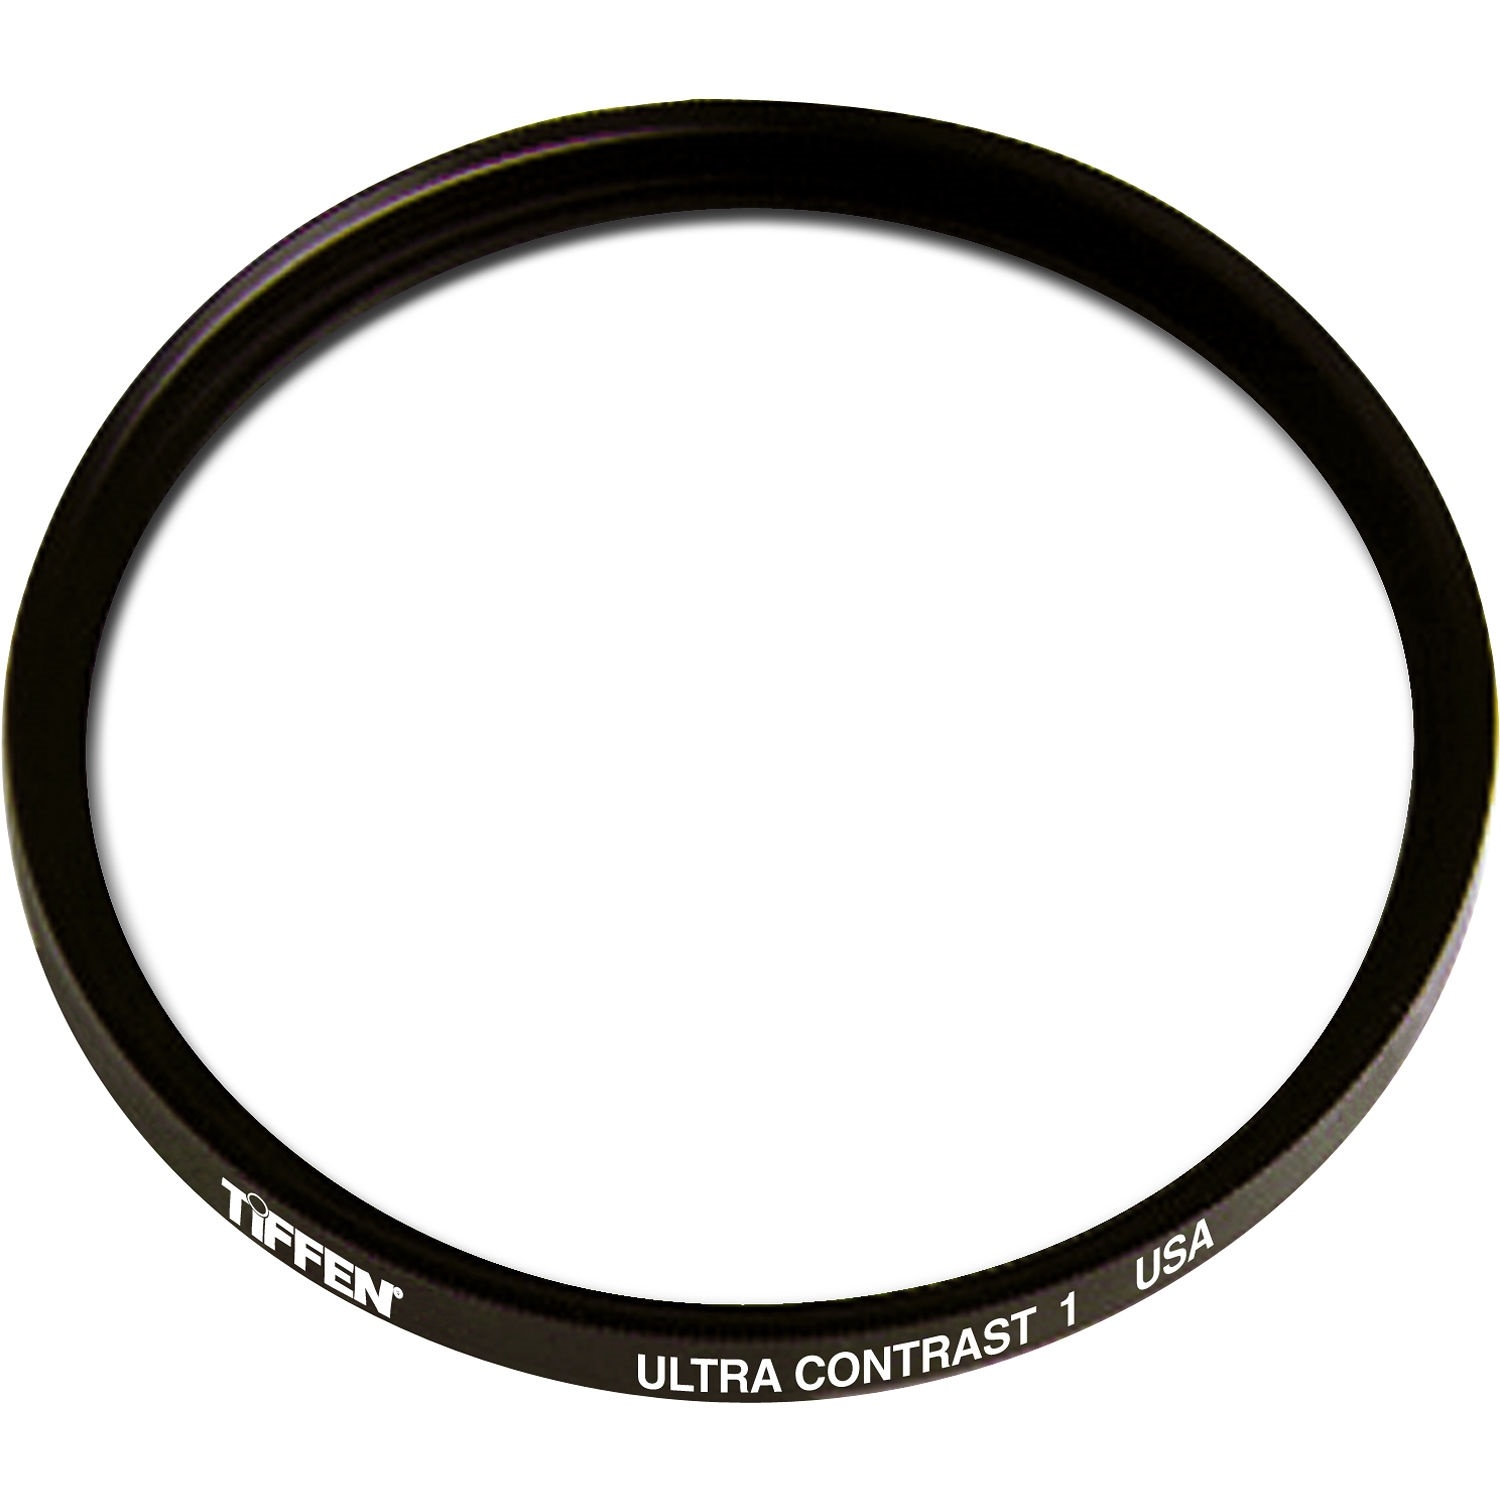 Tiffen 62mm Ultra Contrast 1 Filter